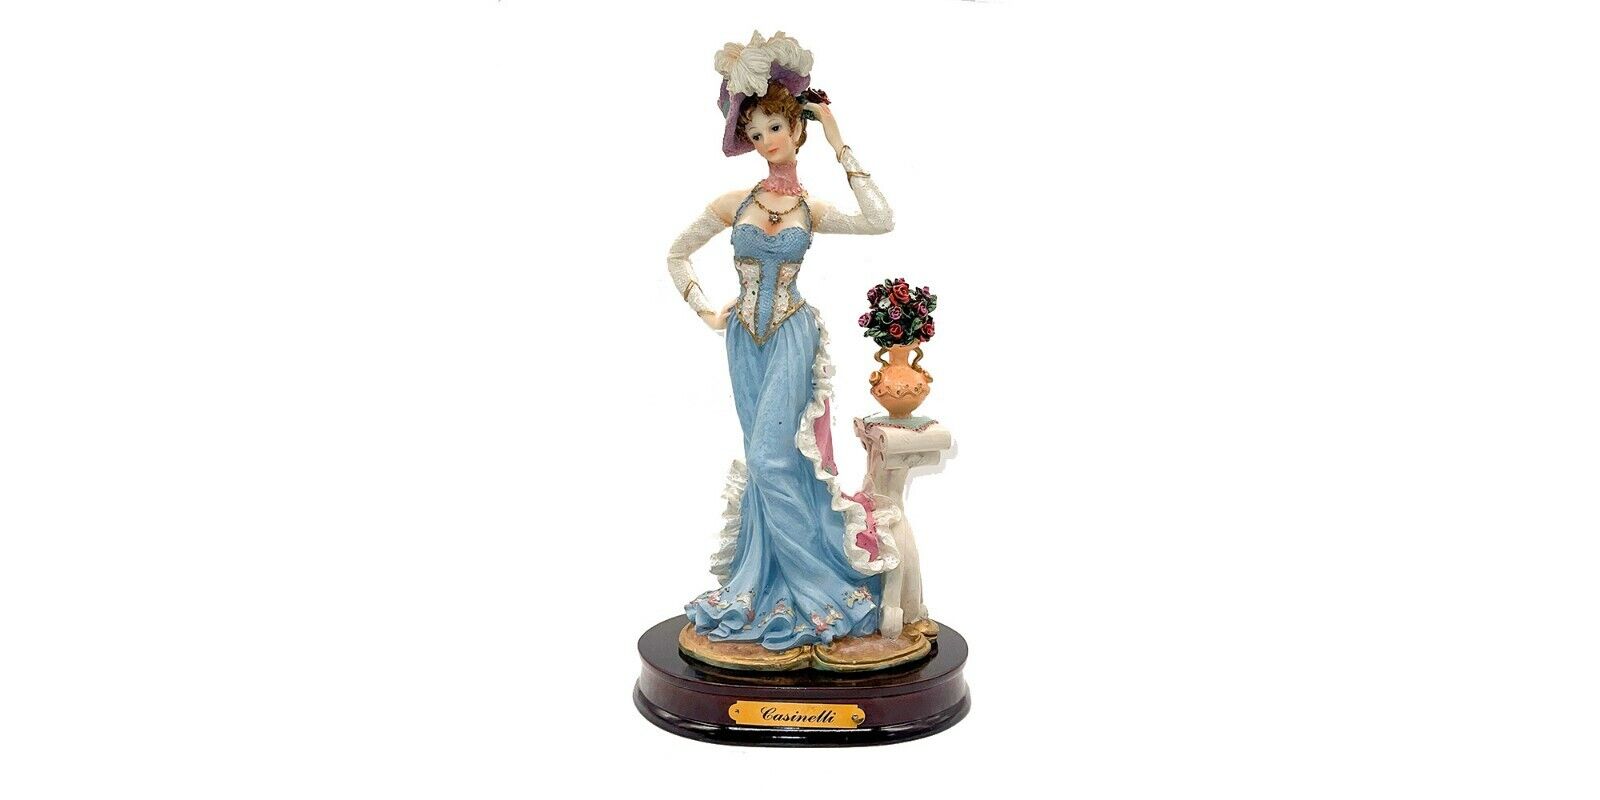 ANTIQUE CASANELLI FANCY LADY FIGURINE - BLUE, Home Decor, Italian Statue, Gift